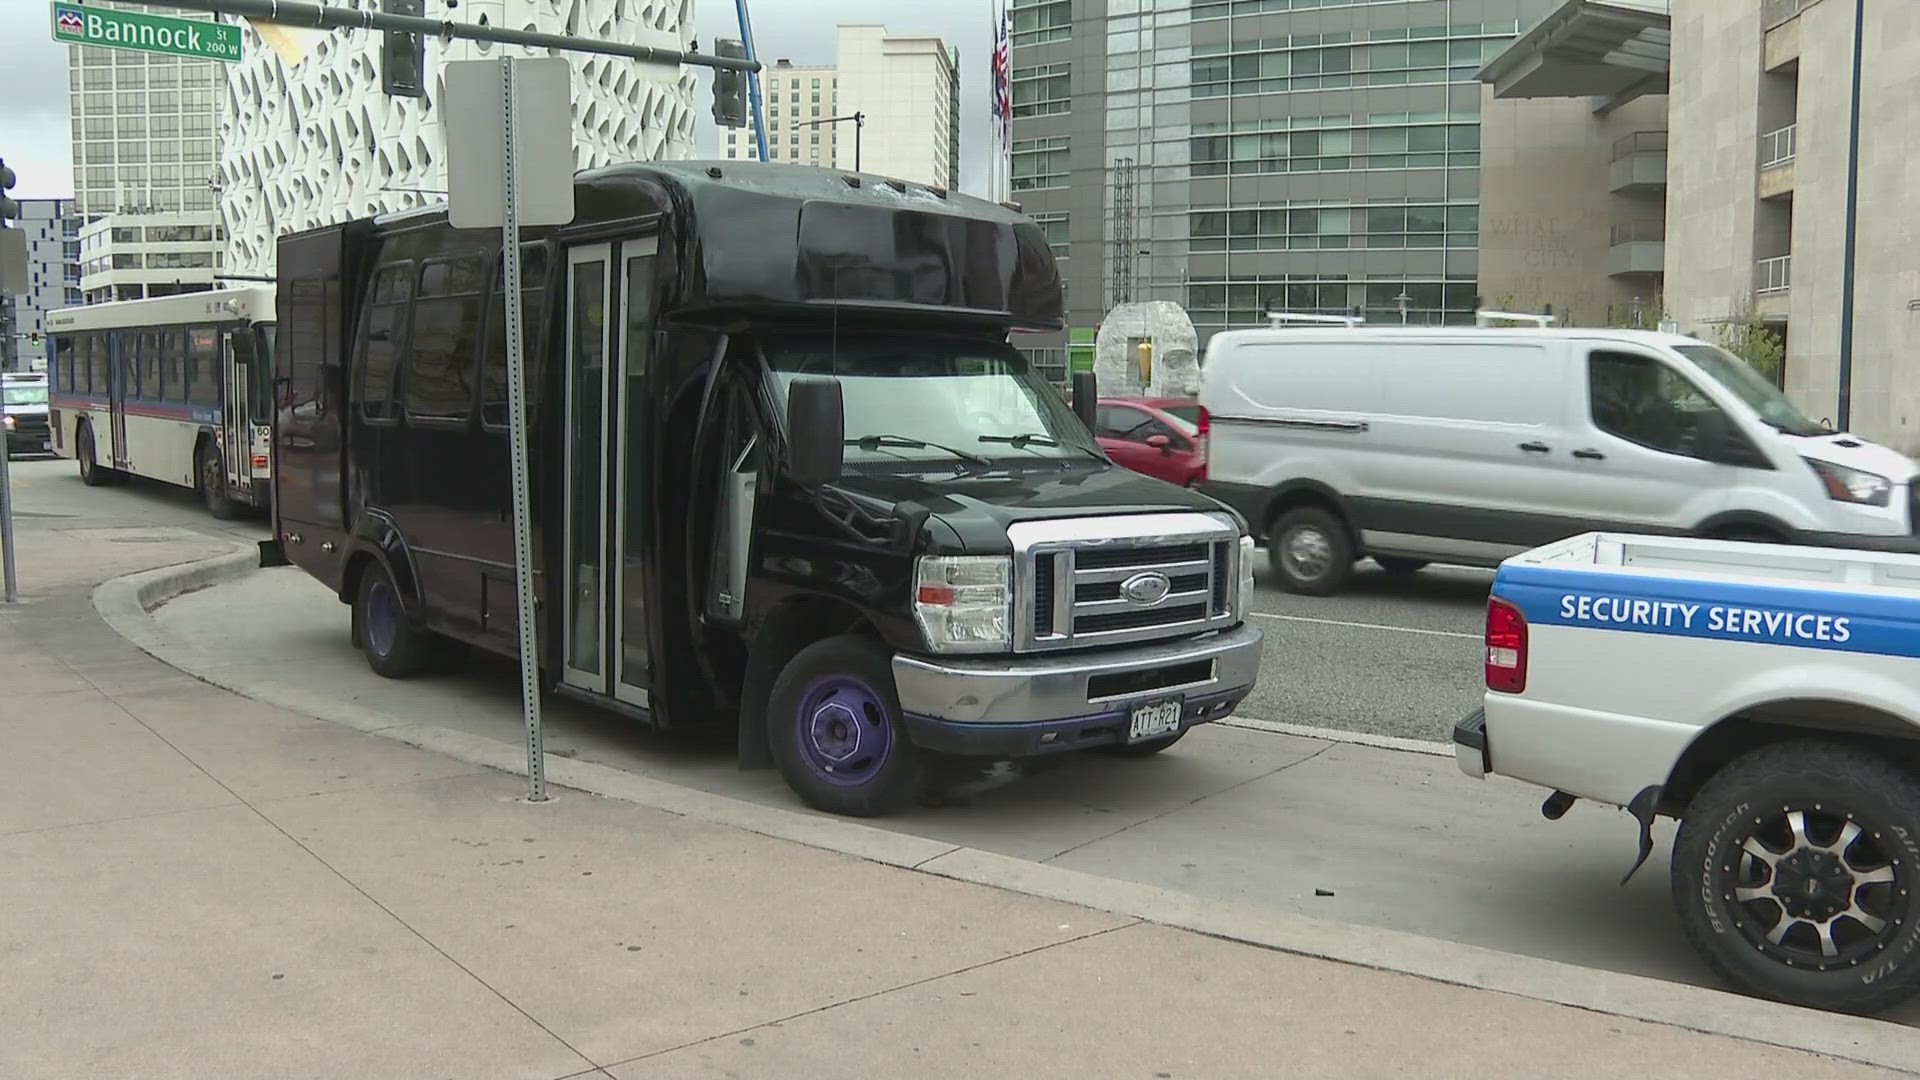 Denver now has 4 public marijuana consumption options, including a new bus.